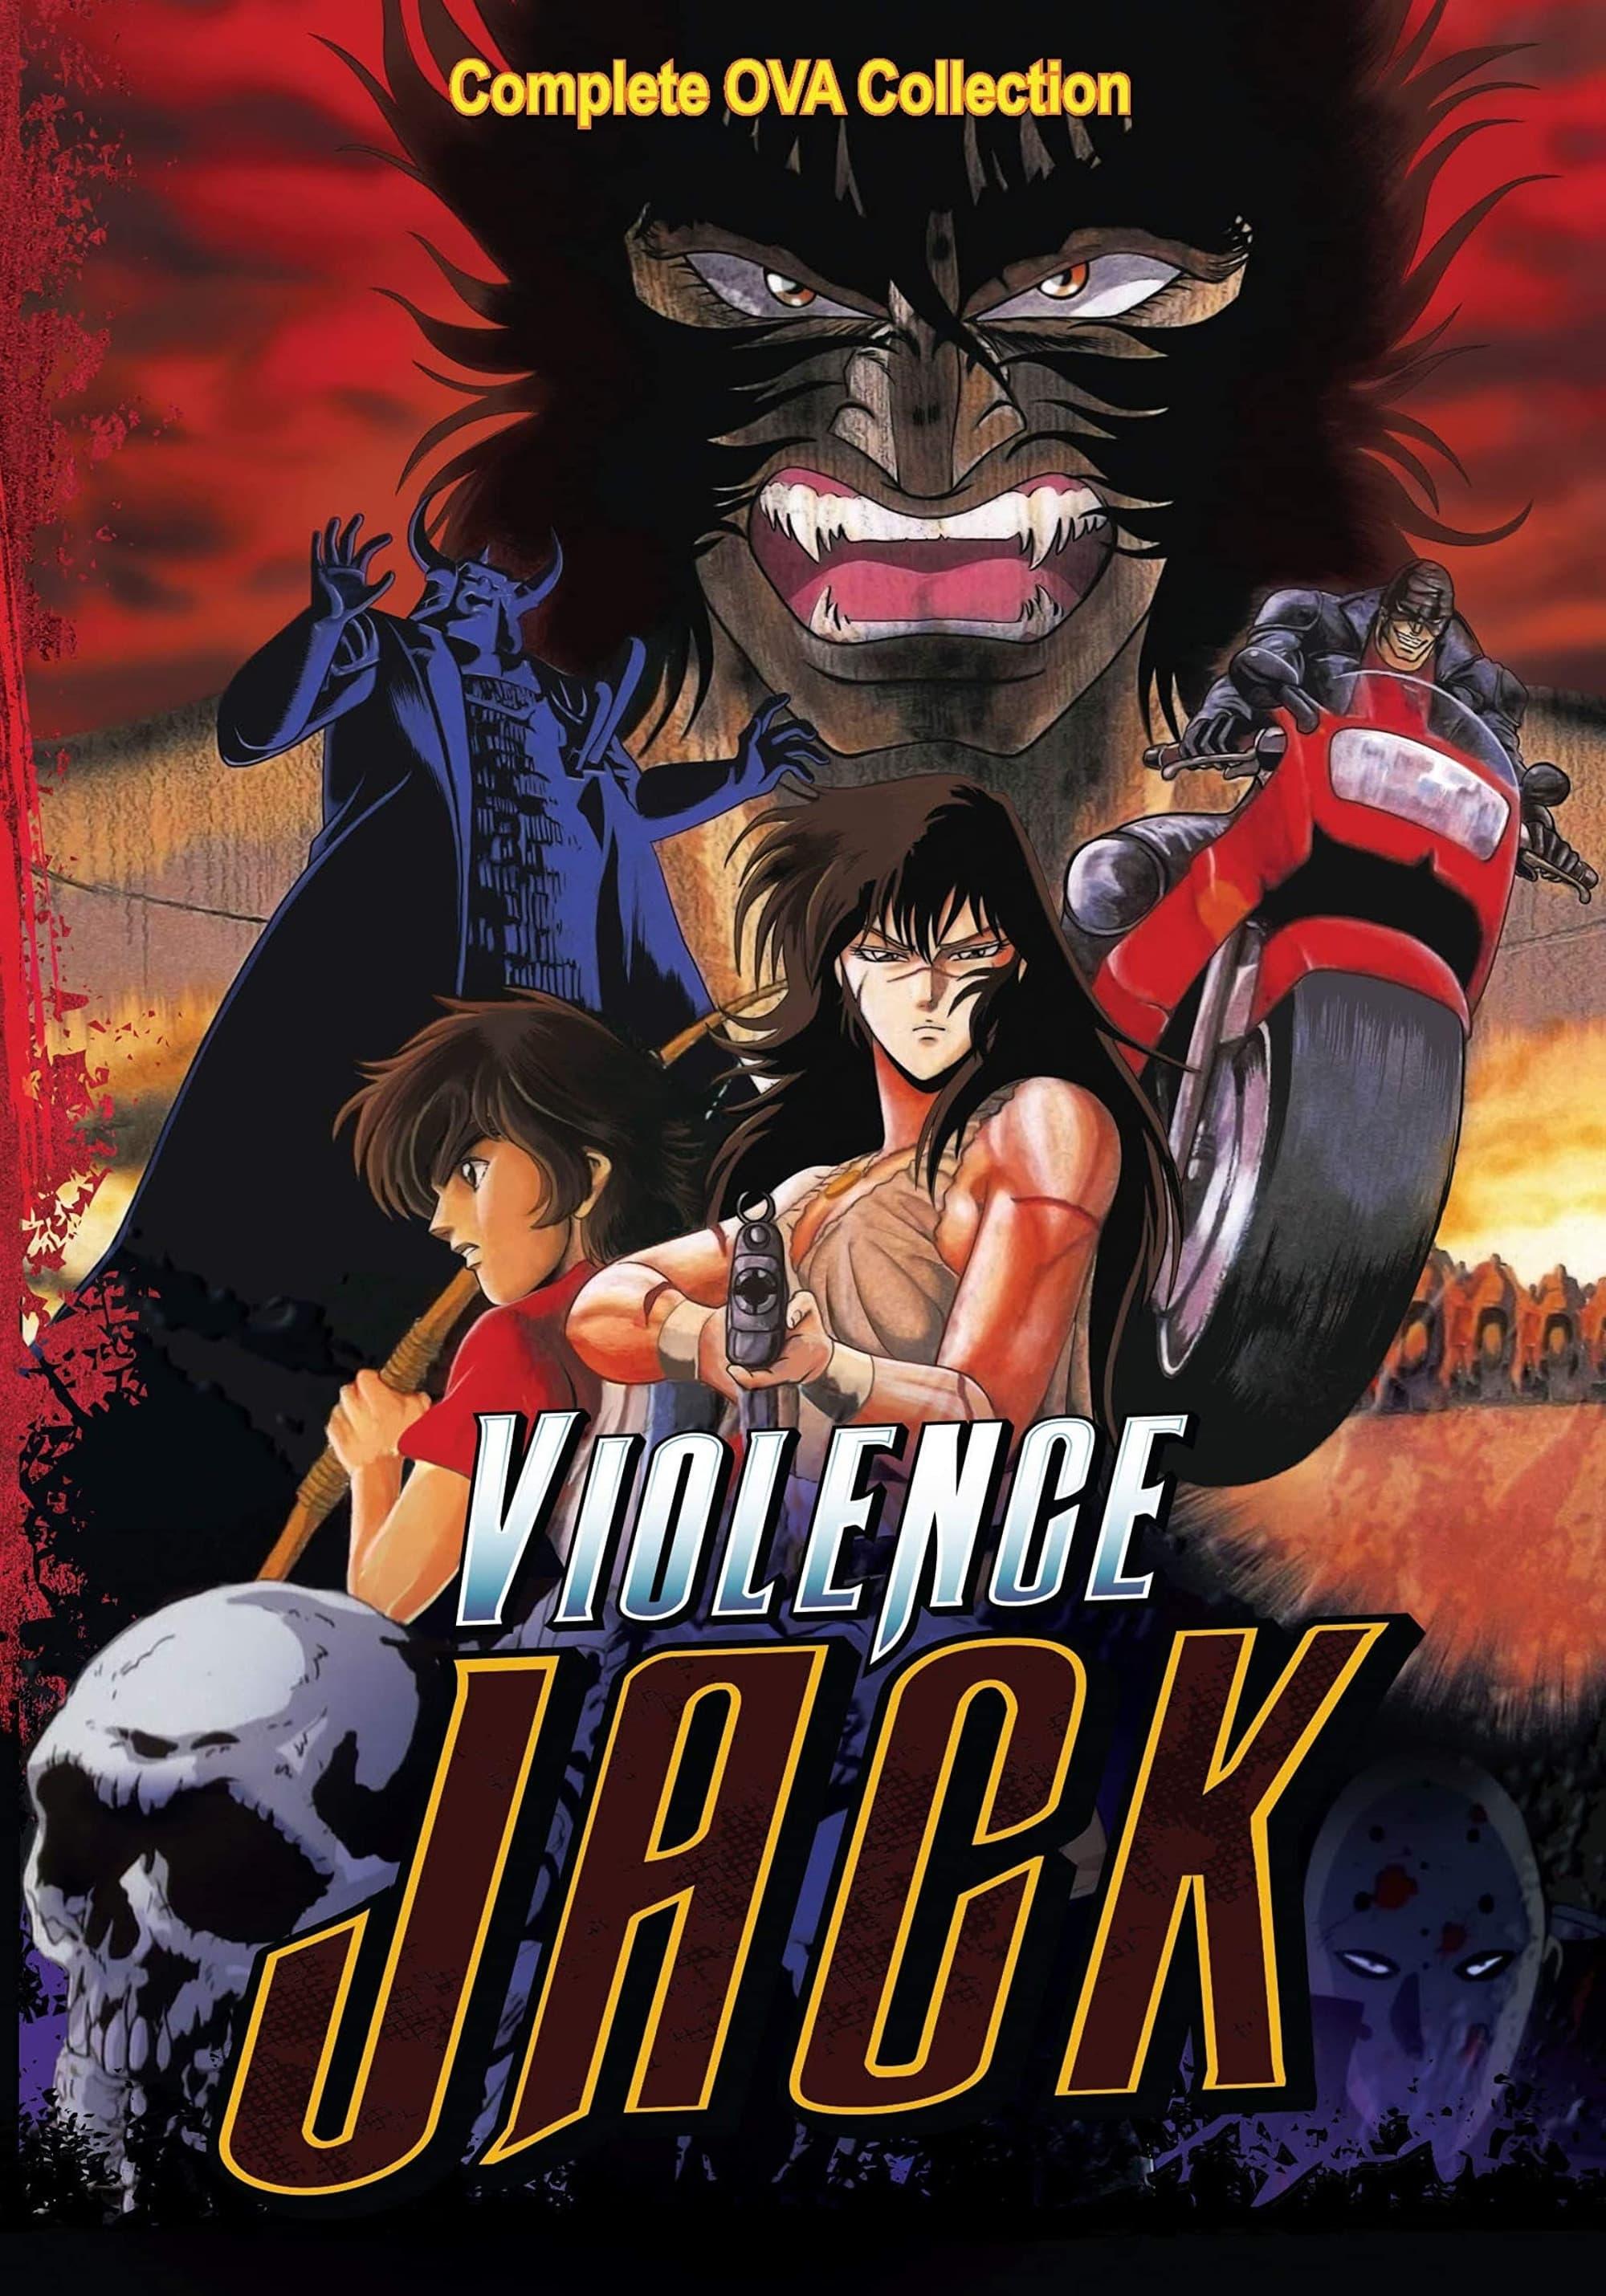 Violence Jack: Hell's Wind poster